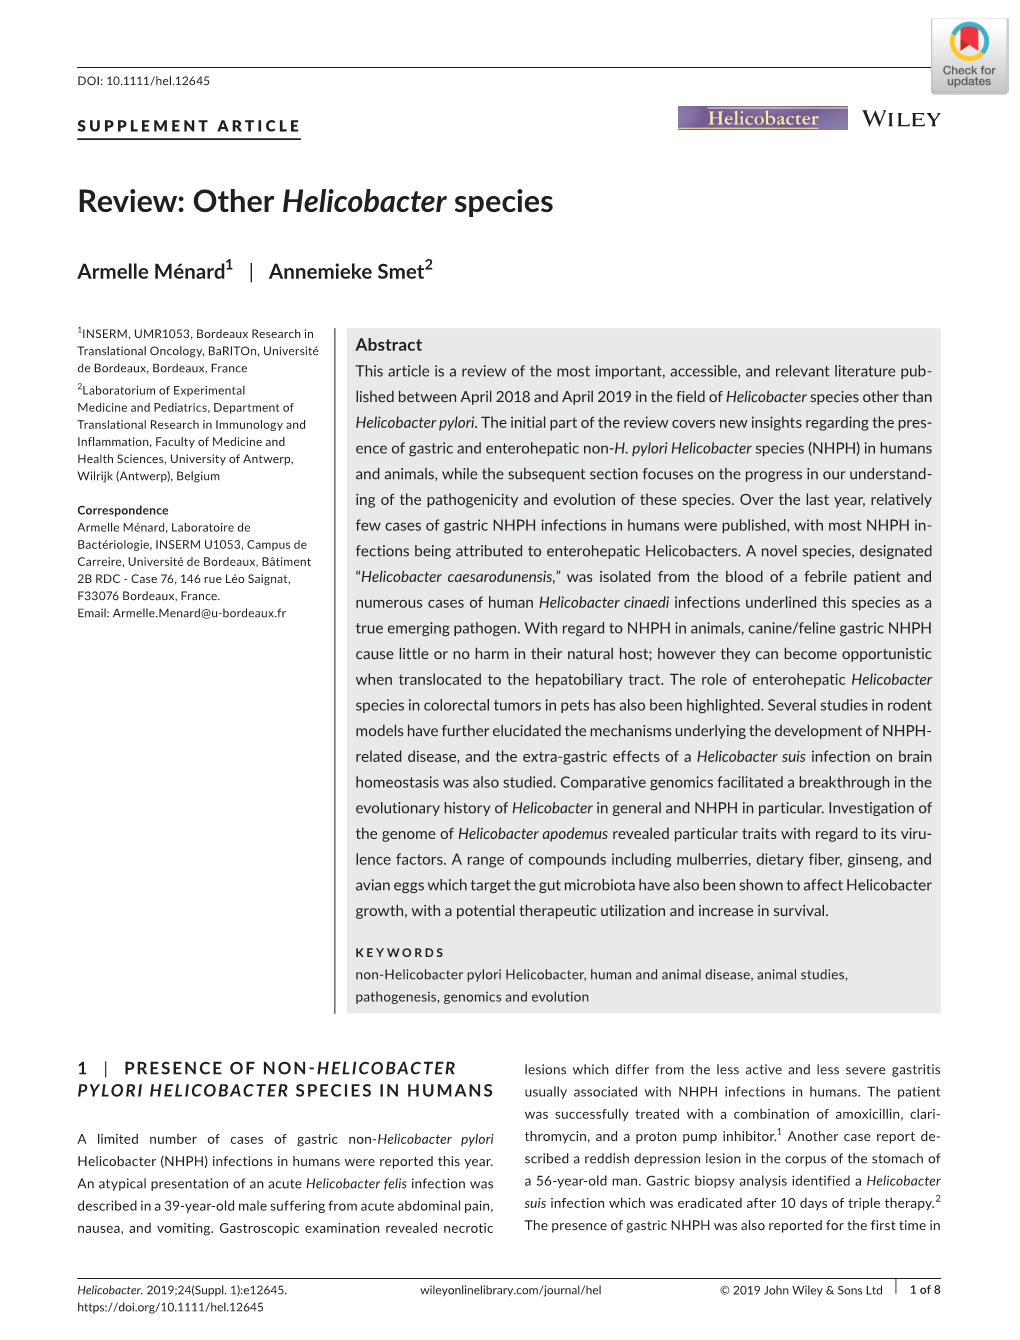 Review: Other Helicobacter Species